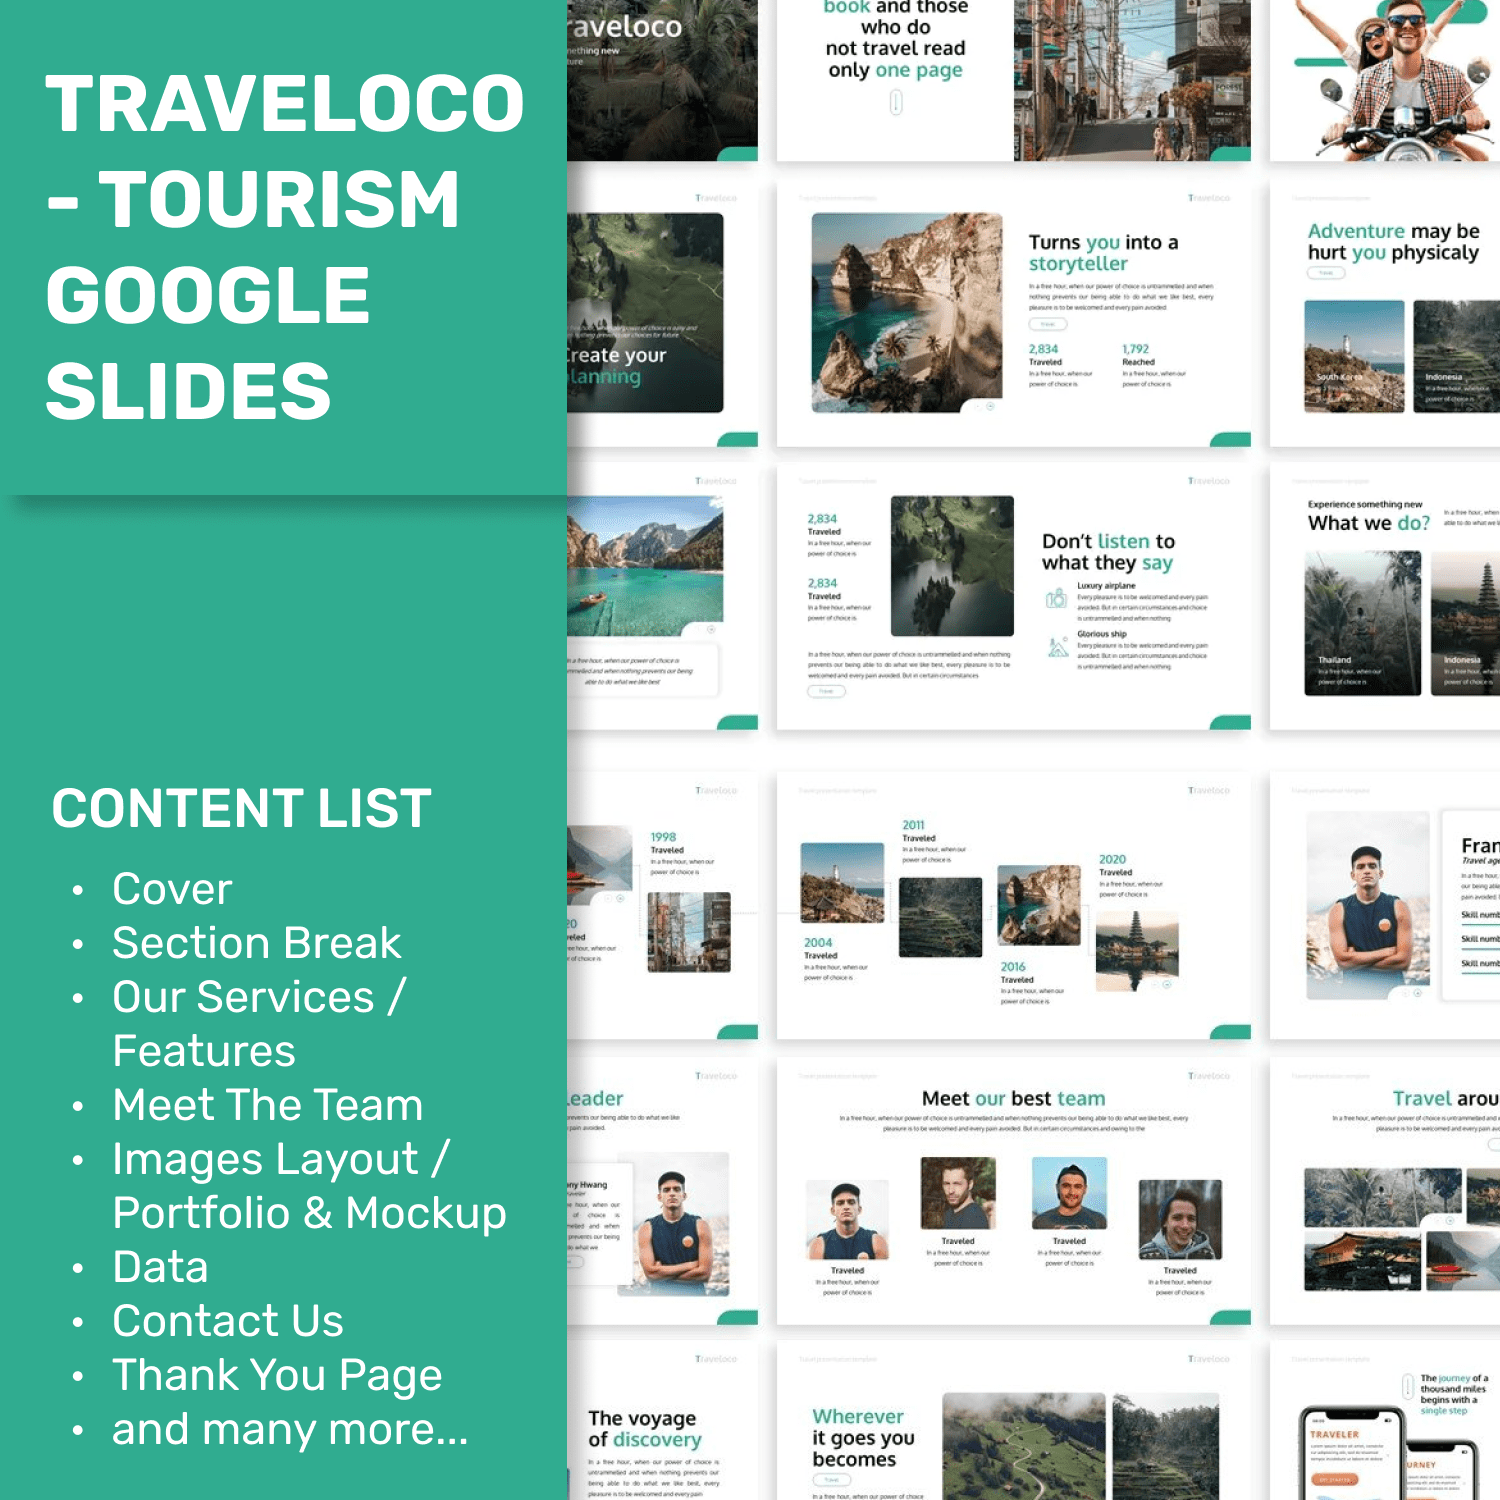 traveloco tourism google slides cover